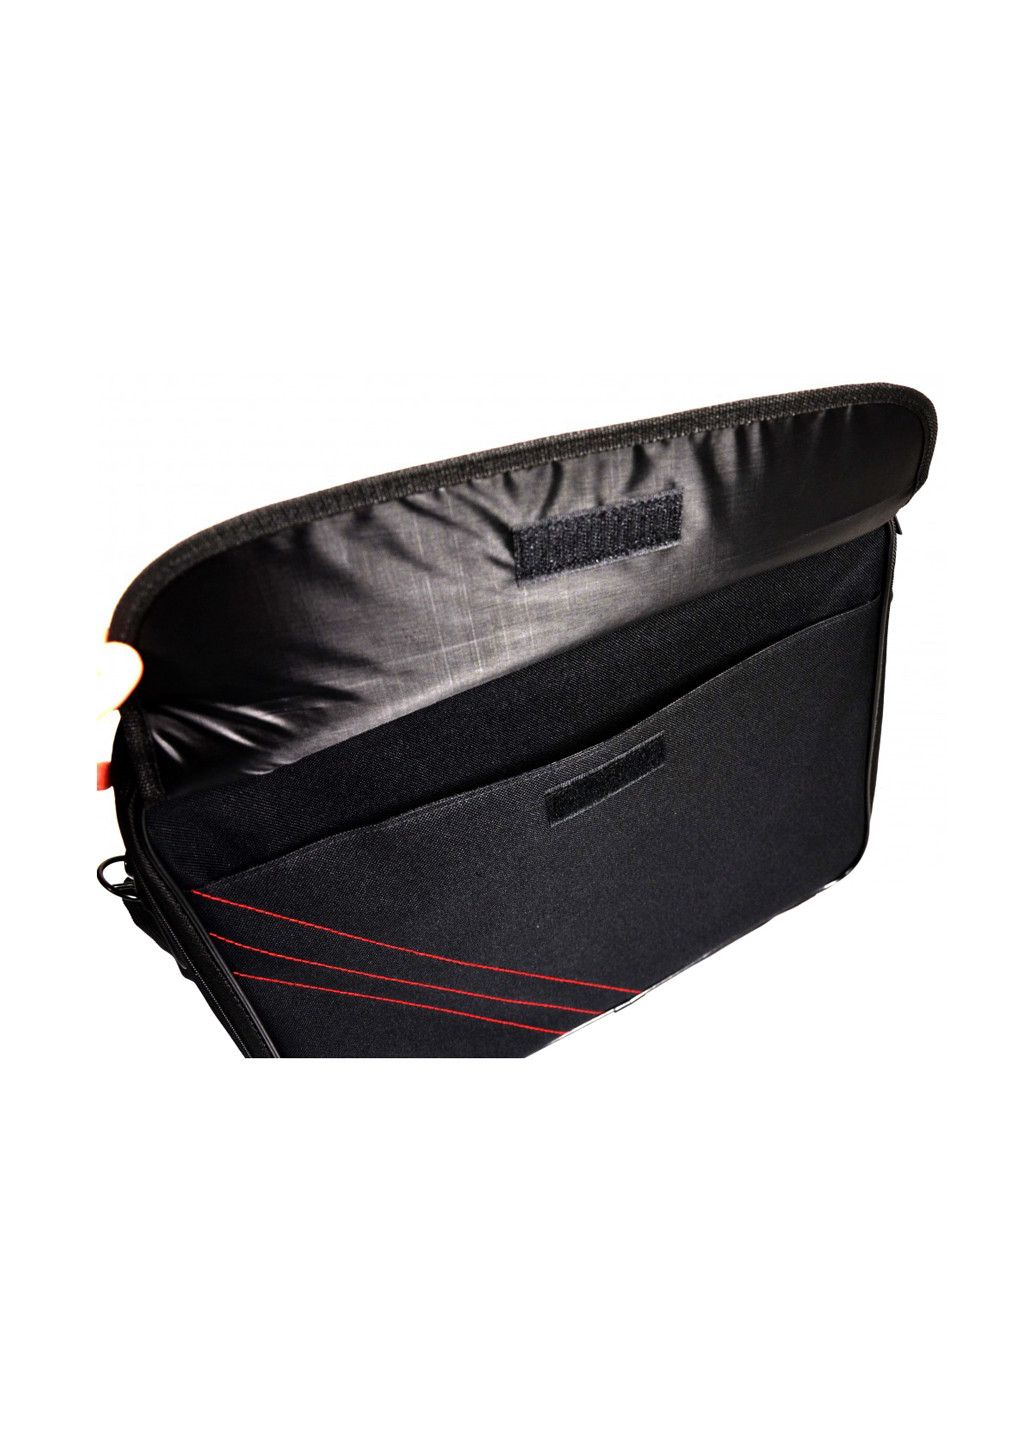 Сумка для ноутбука BAG S15 15.6 Black Port Designs bag s15 15.6" black (137229790)